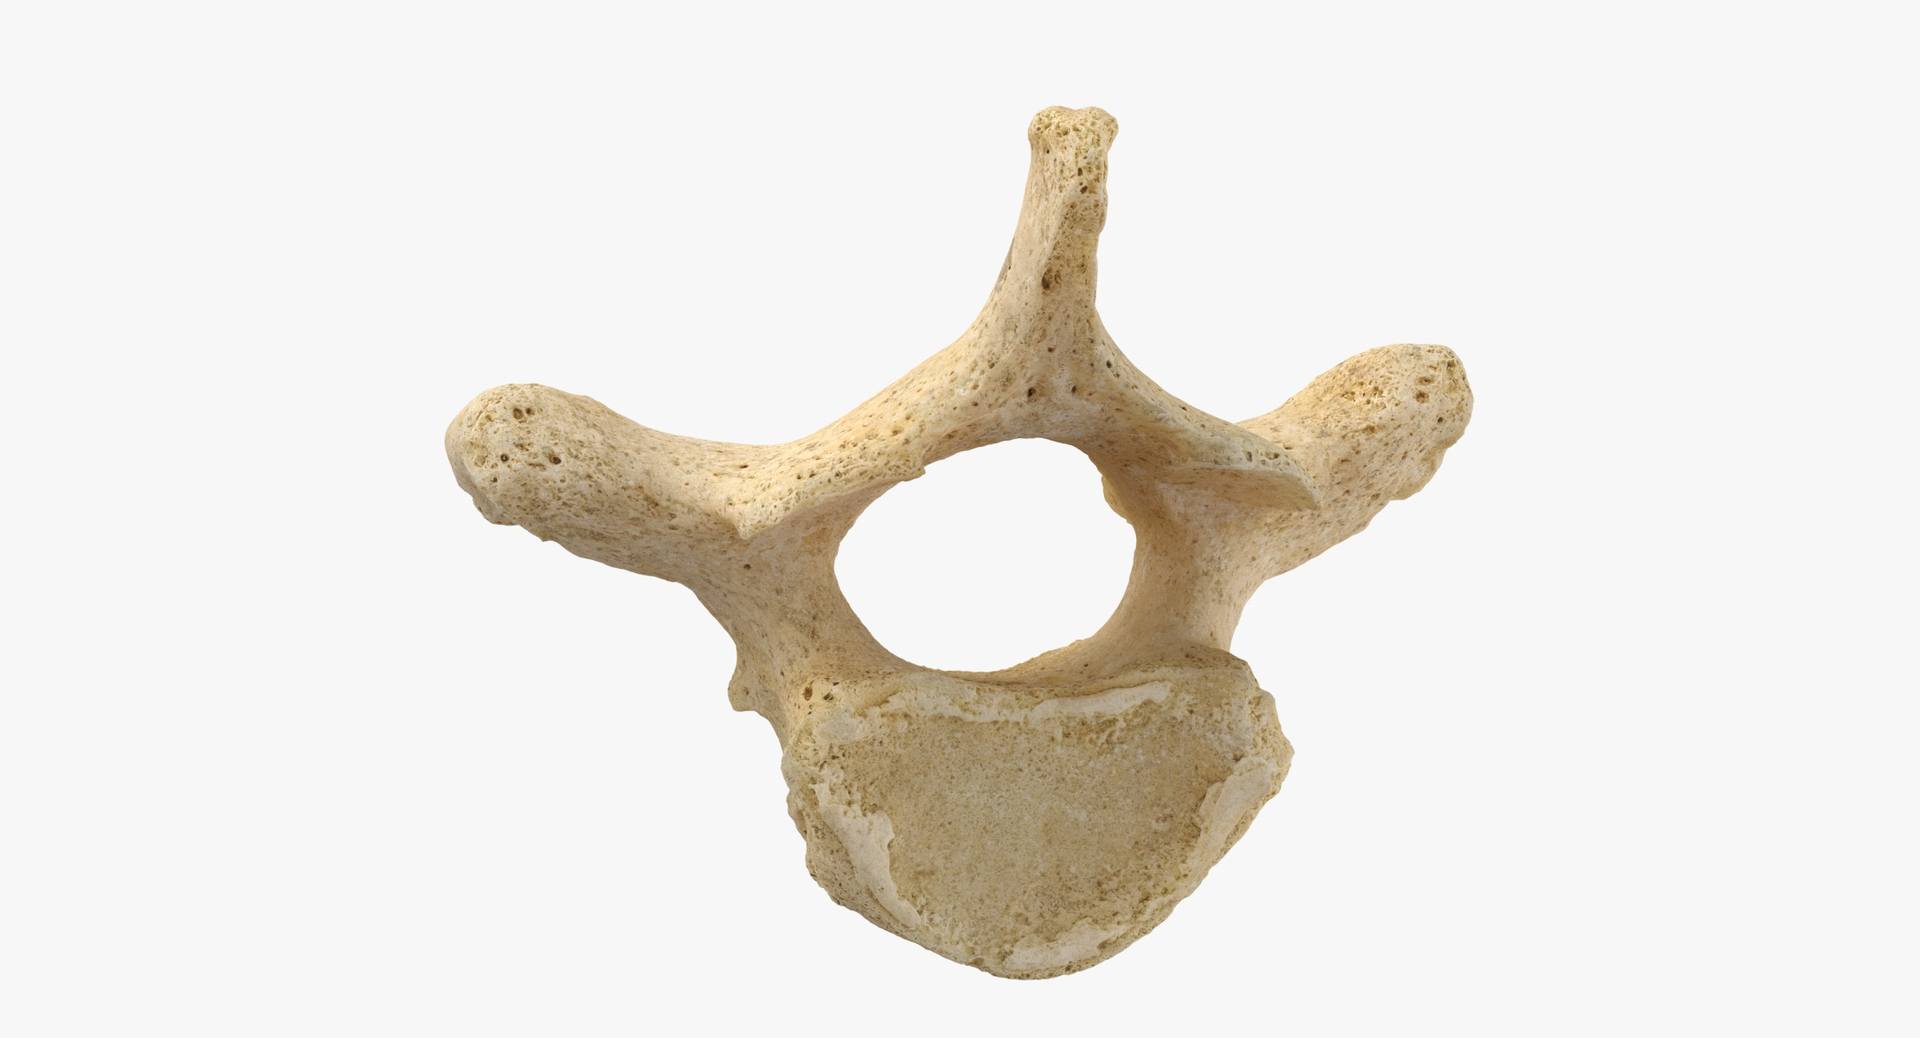 Thoracic vertebrae (Th1-Th12)